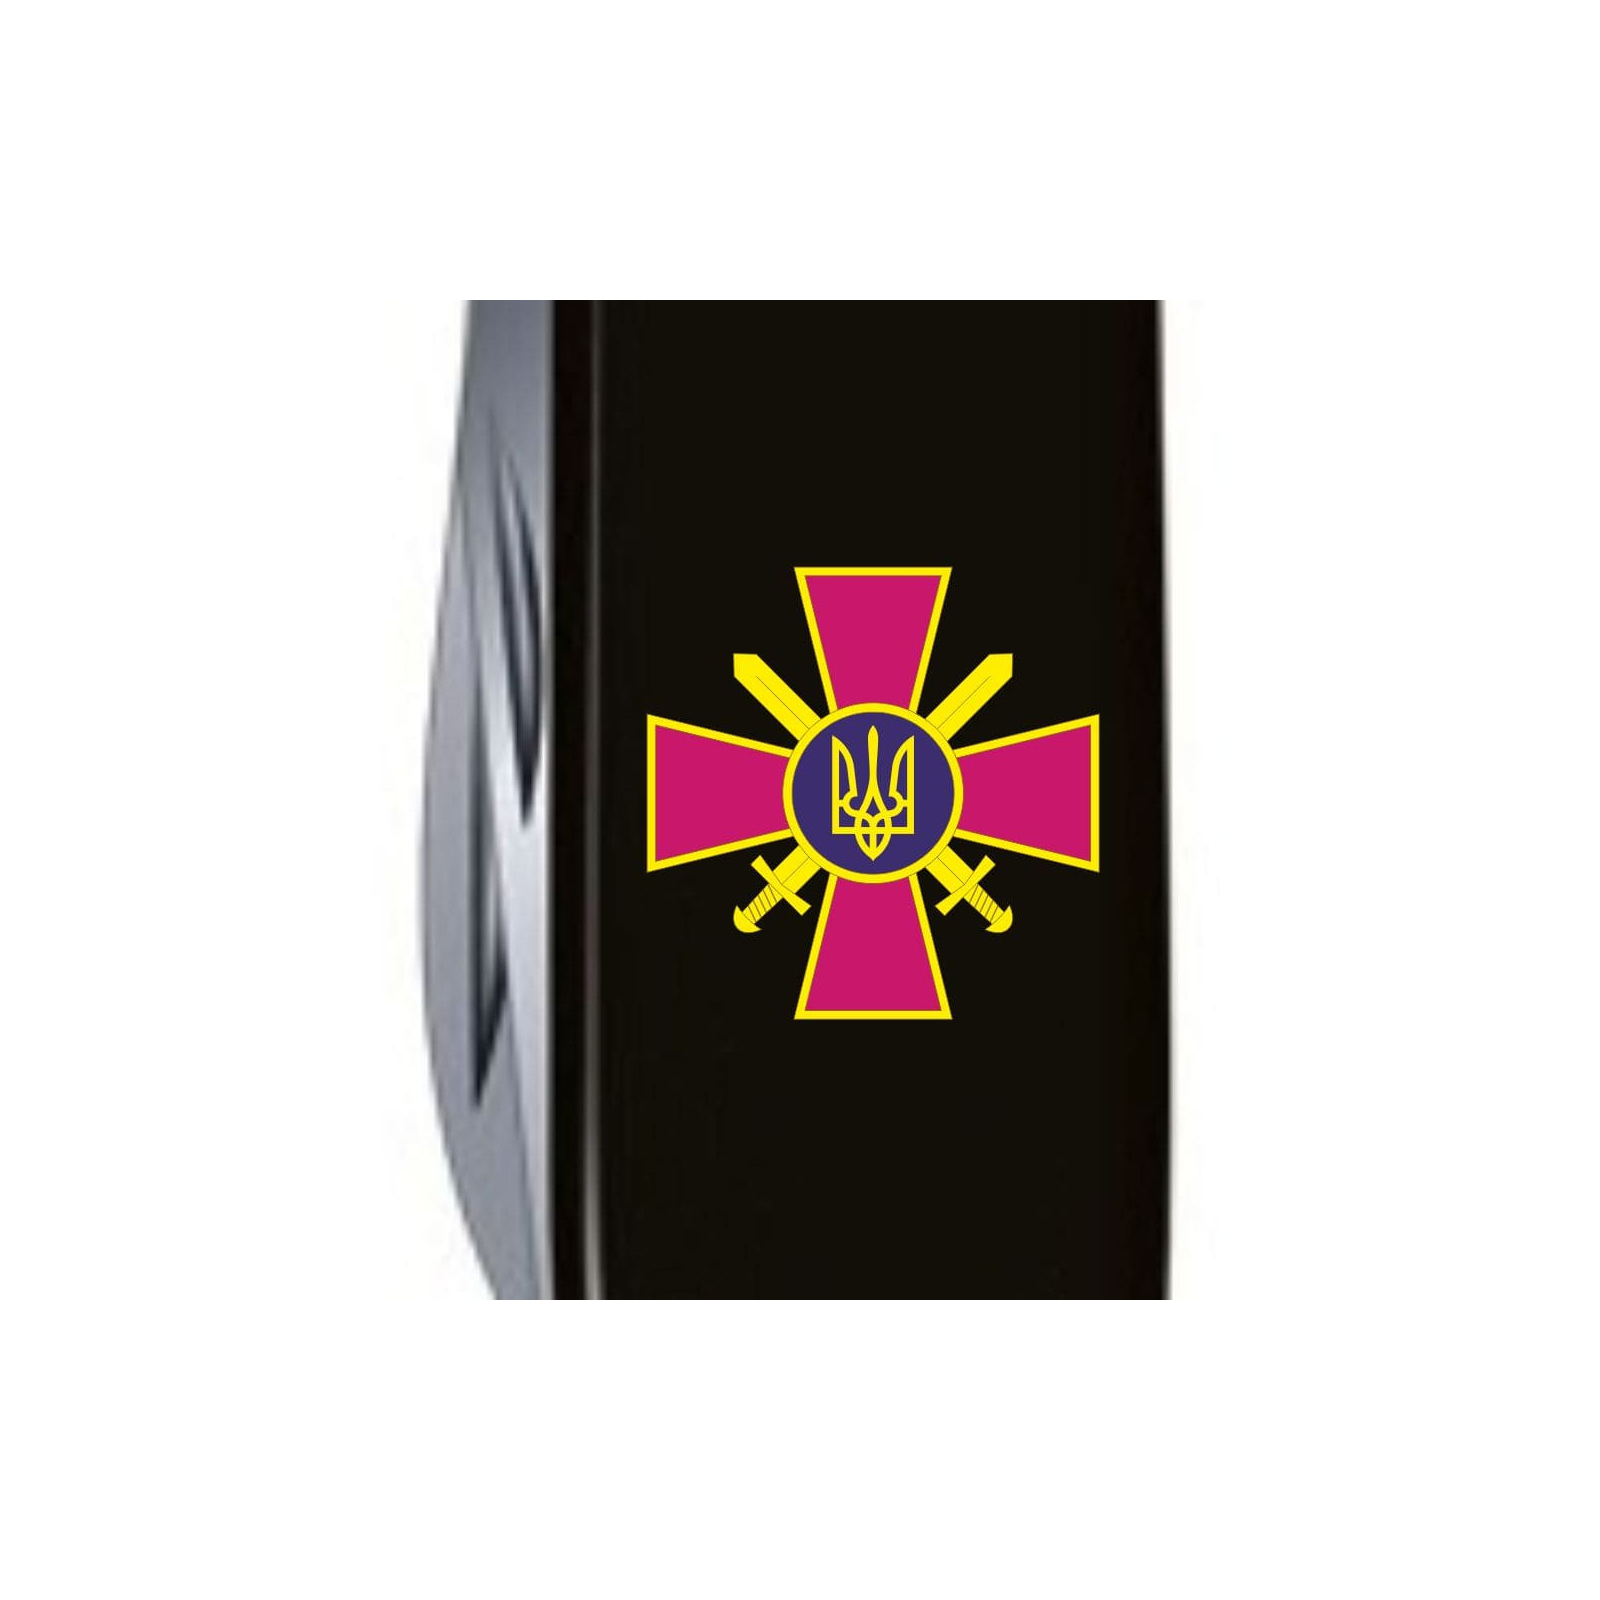 Нож Victorinox Spartan Army Black "Емблема СВ ЗСУ" (1.3603.3_W0020u) изображение 4